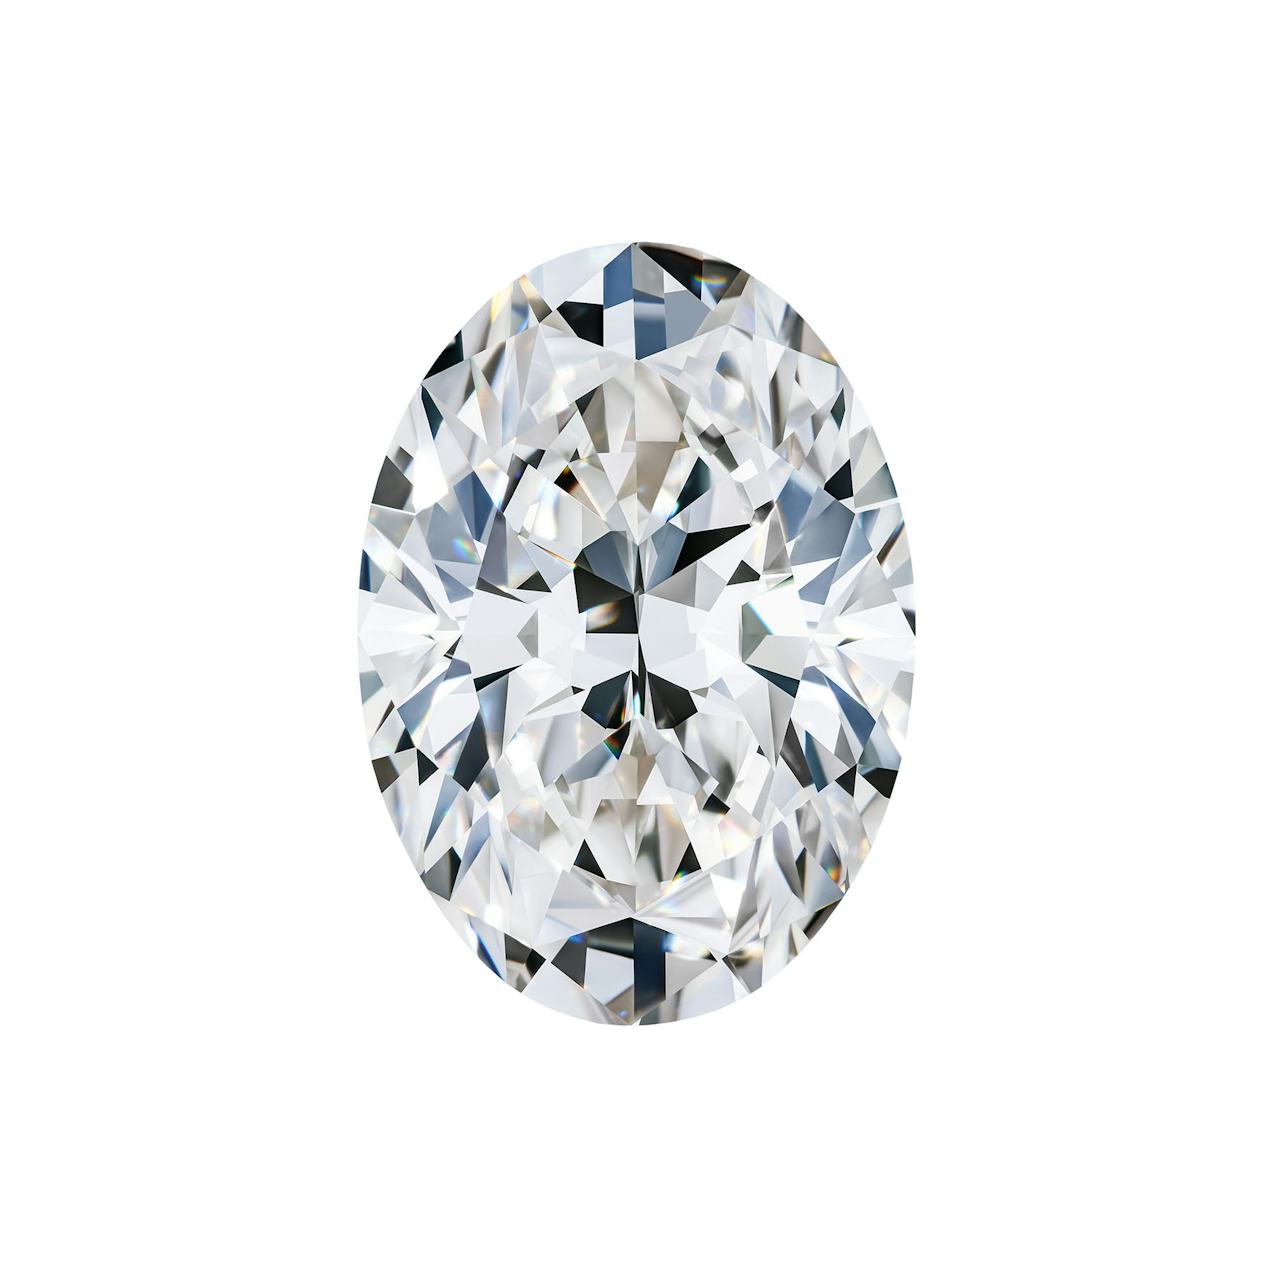 2 Carat Oval Shaped Diamonds